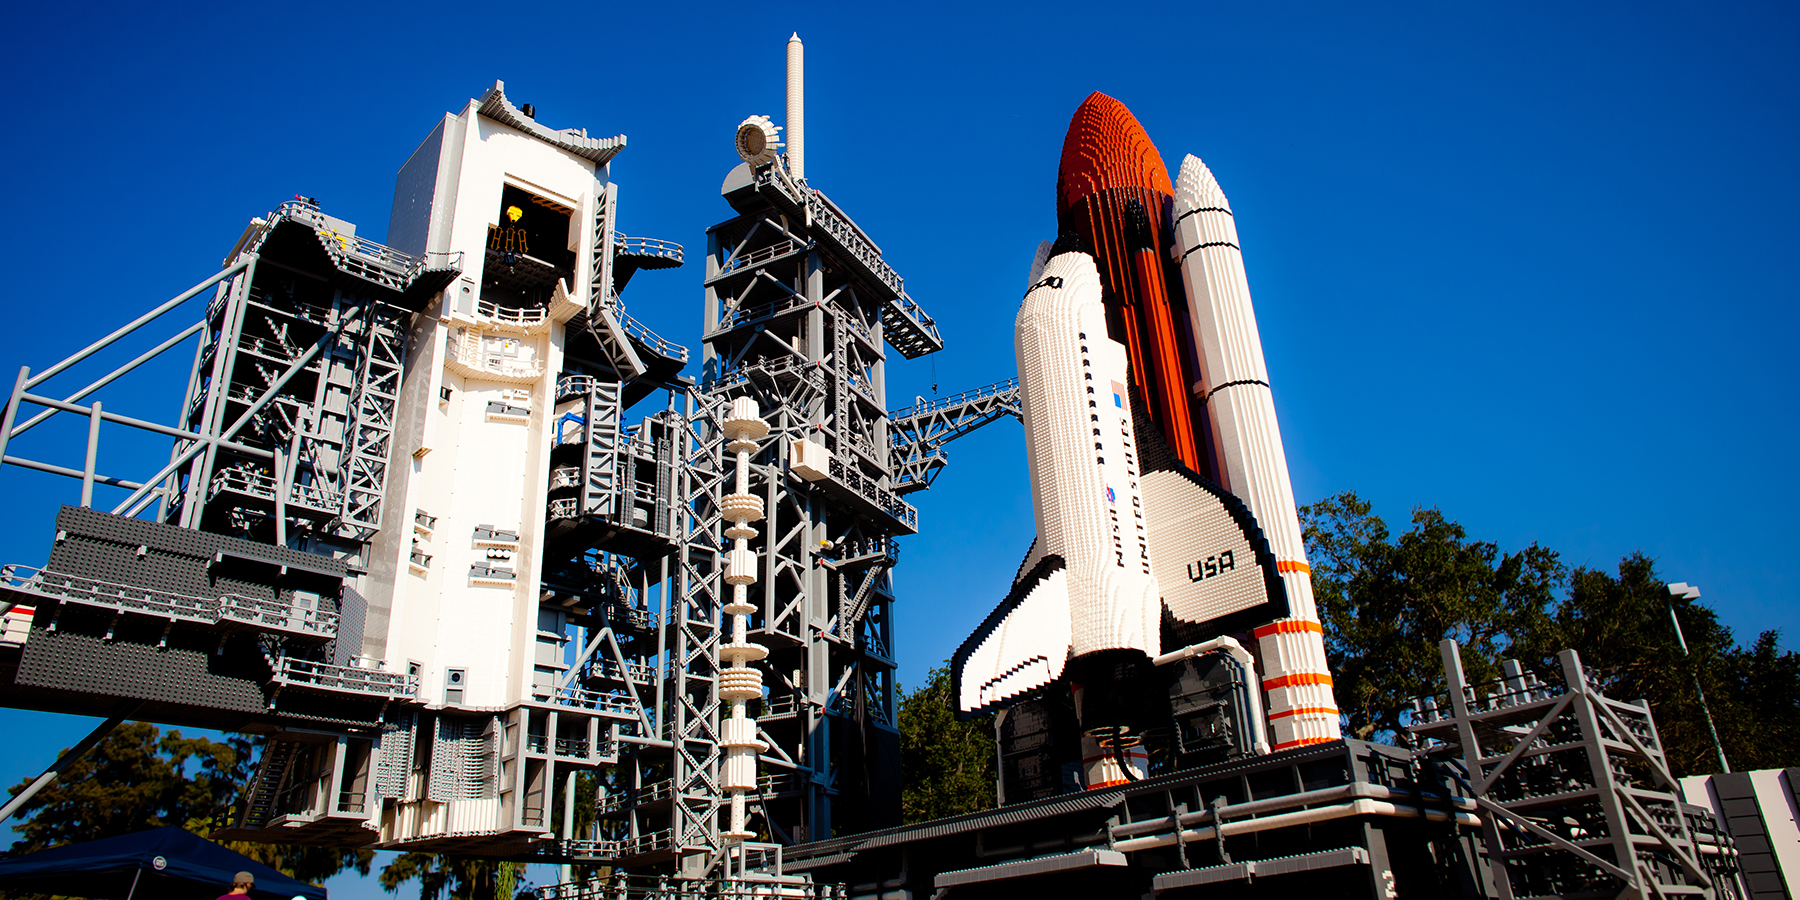 MINILAND Shuttle Launch